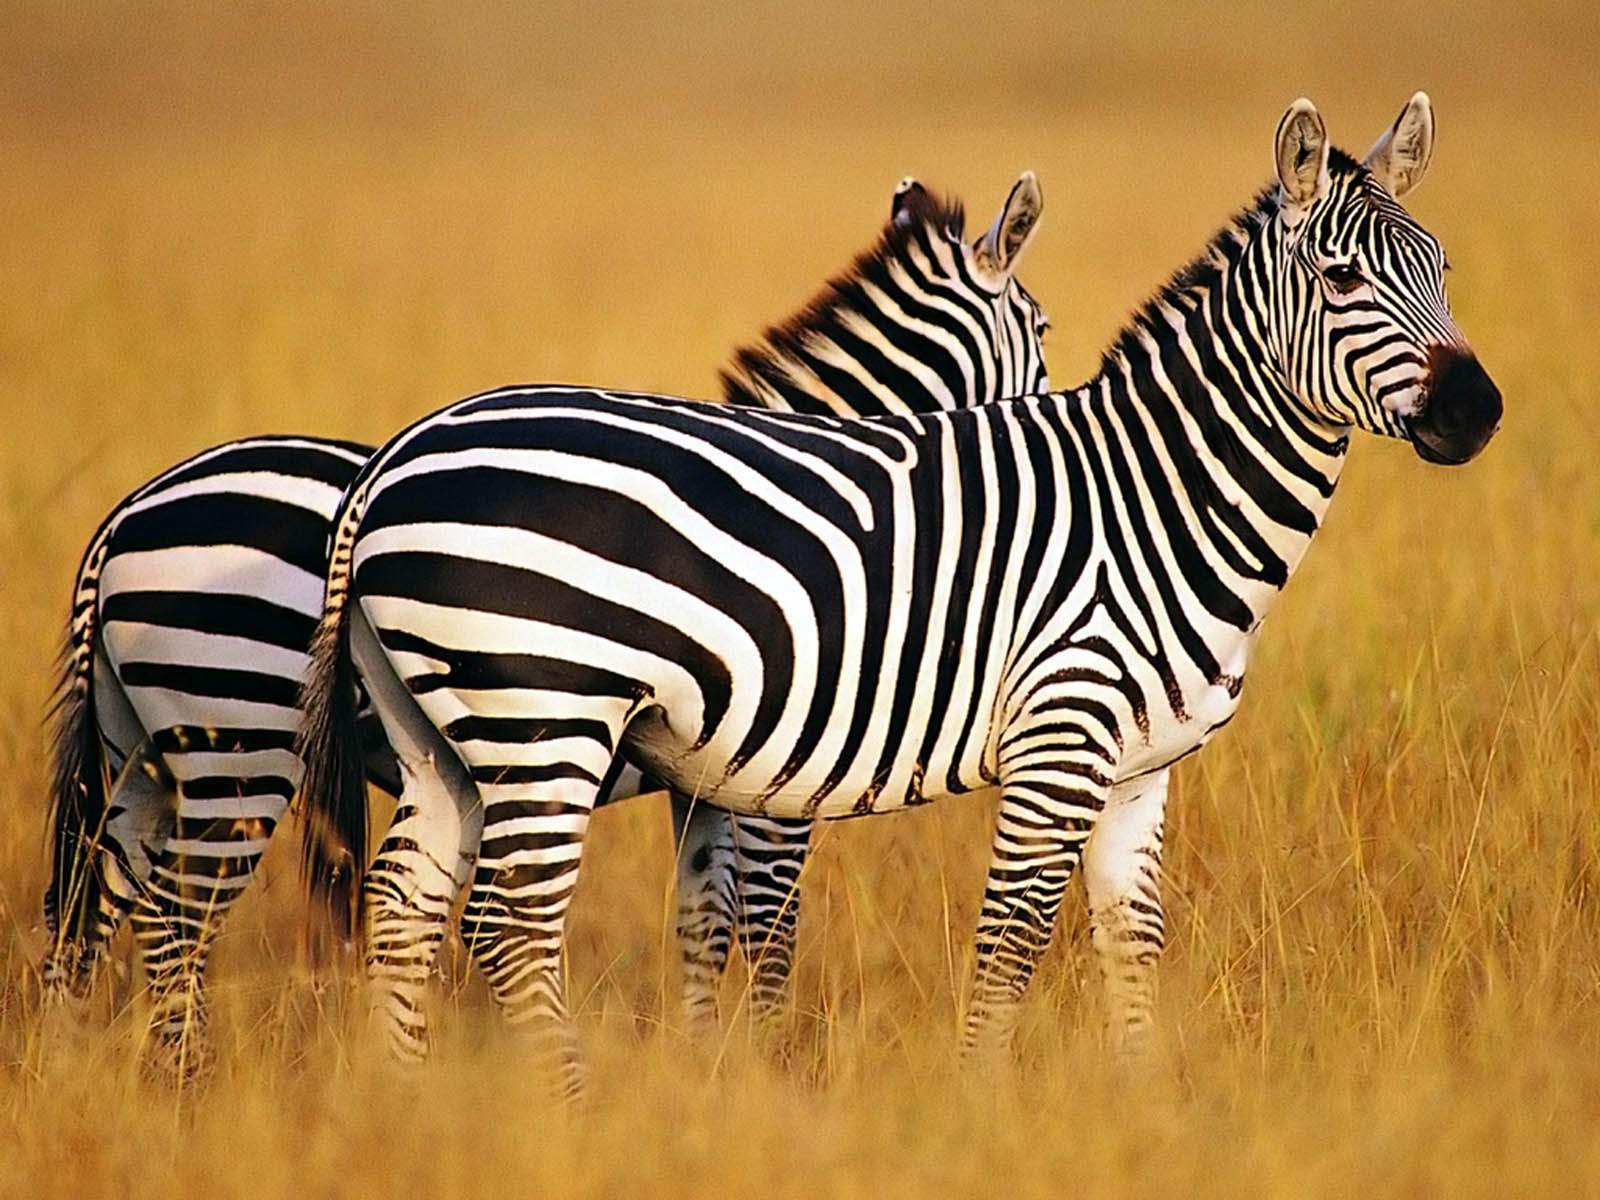 Fondos de Zebra - Los mejores fondos de Zebra gratis - WallpaperAccess